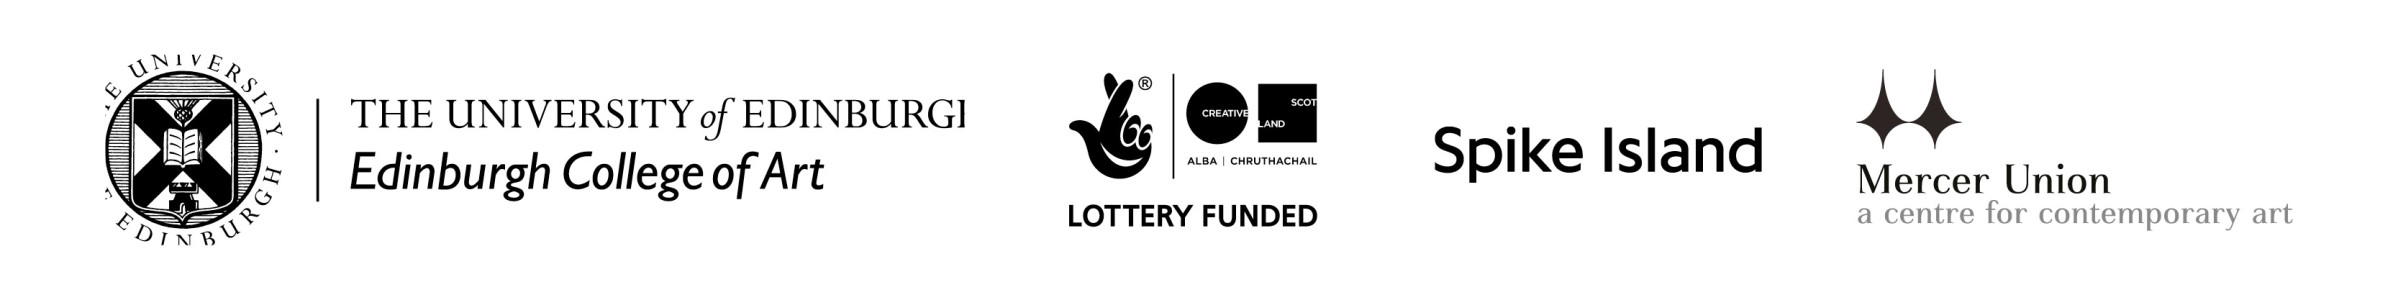 Logo for ECA, Creative Scotland, Spike Island and Mercer Union